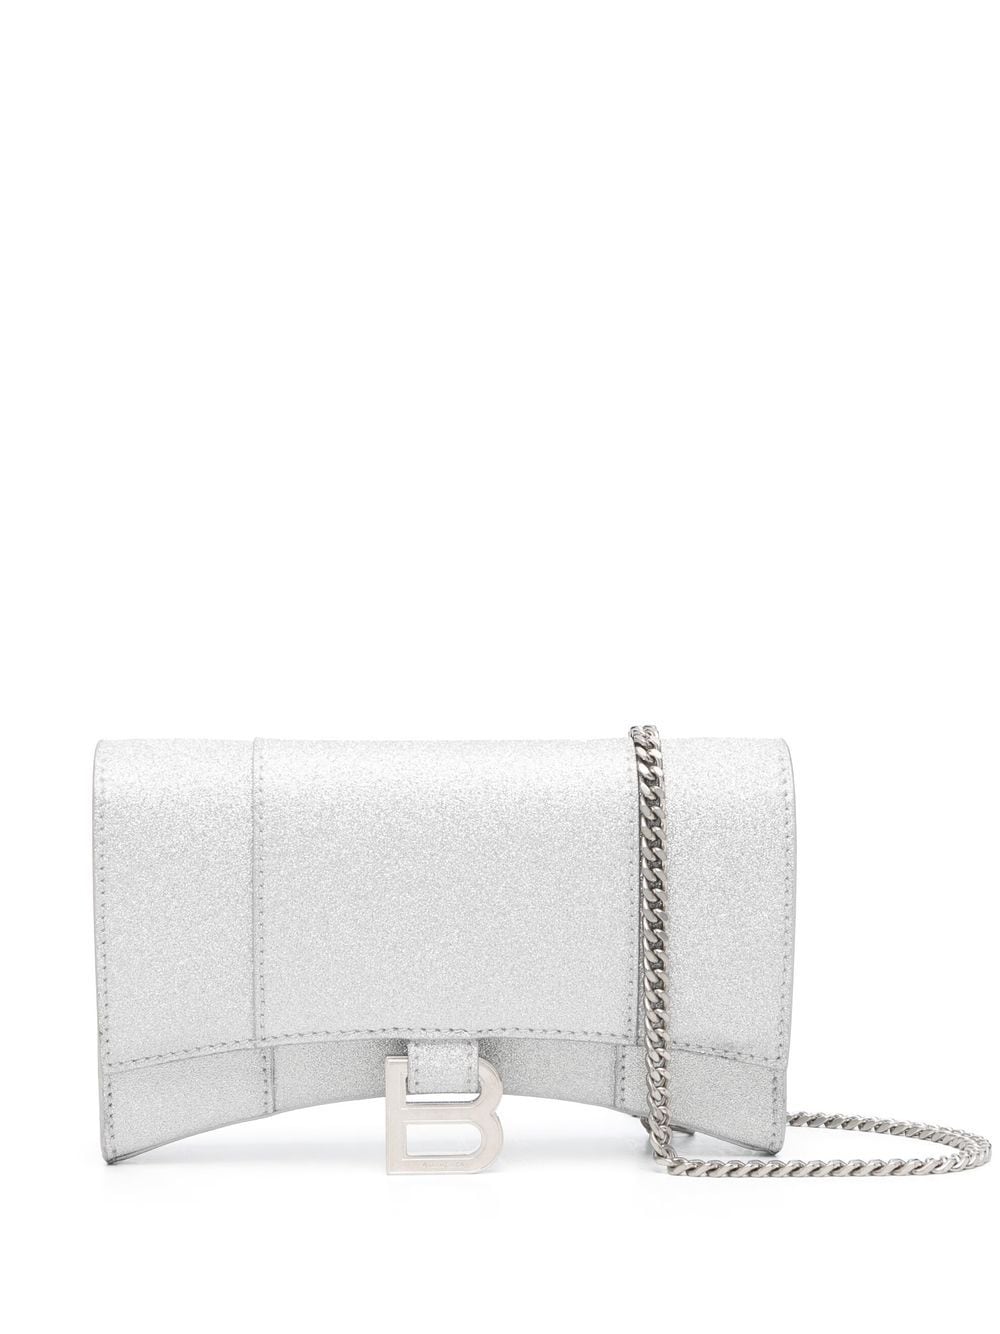 Balenciaga XS Hourglass wallet shoulder bag - Silver